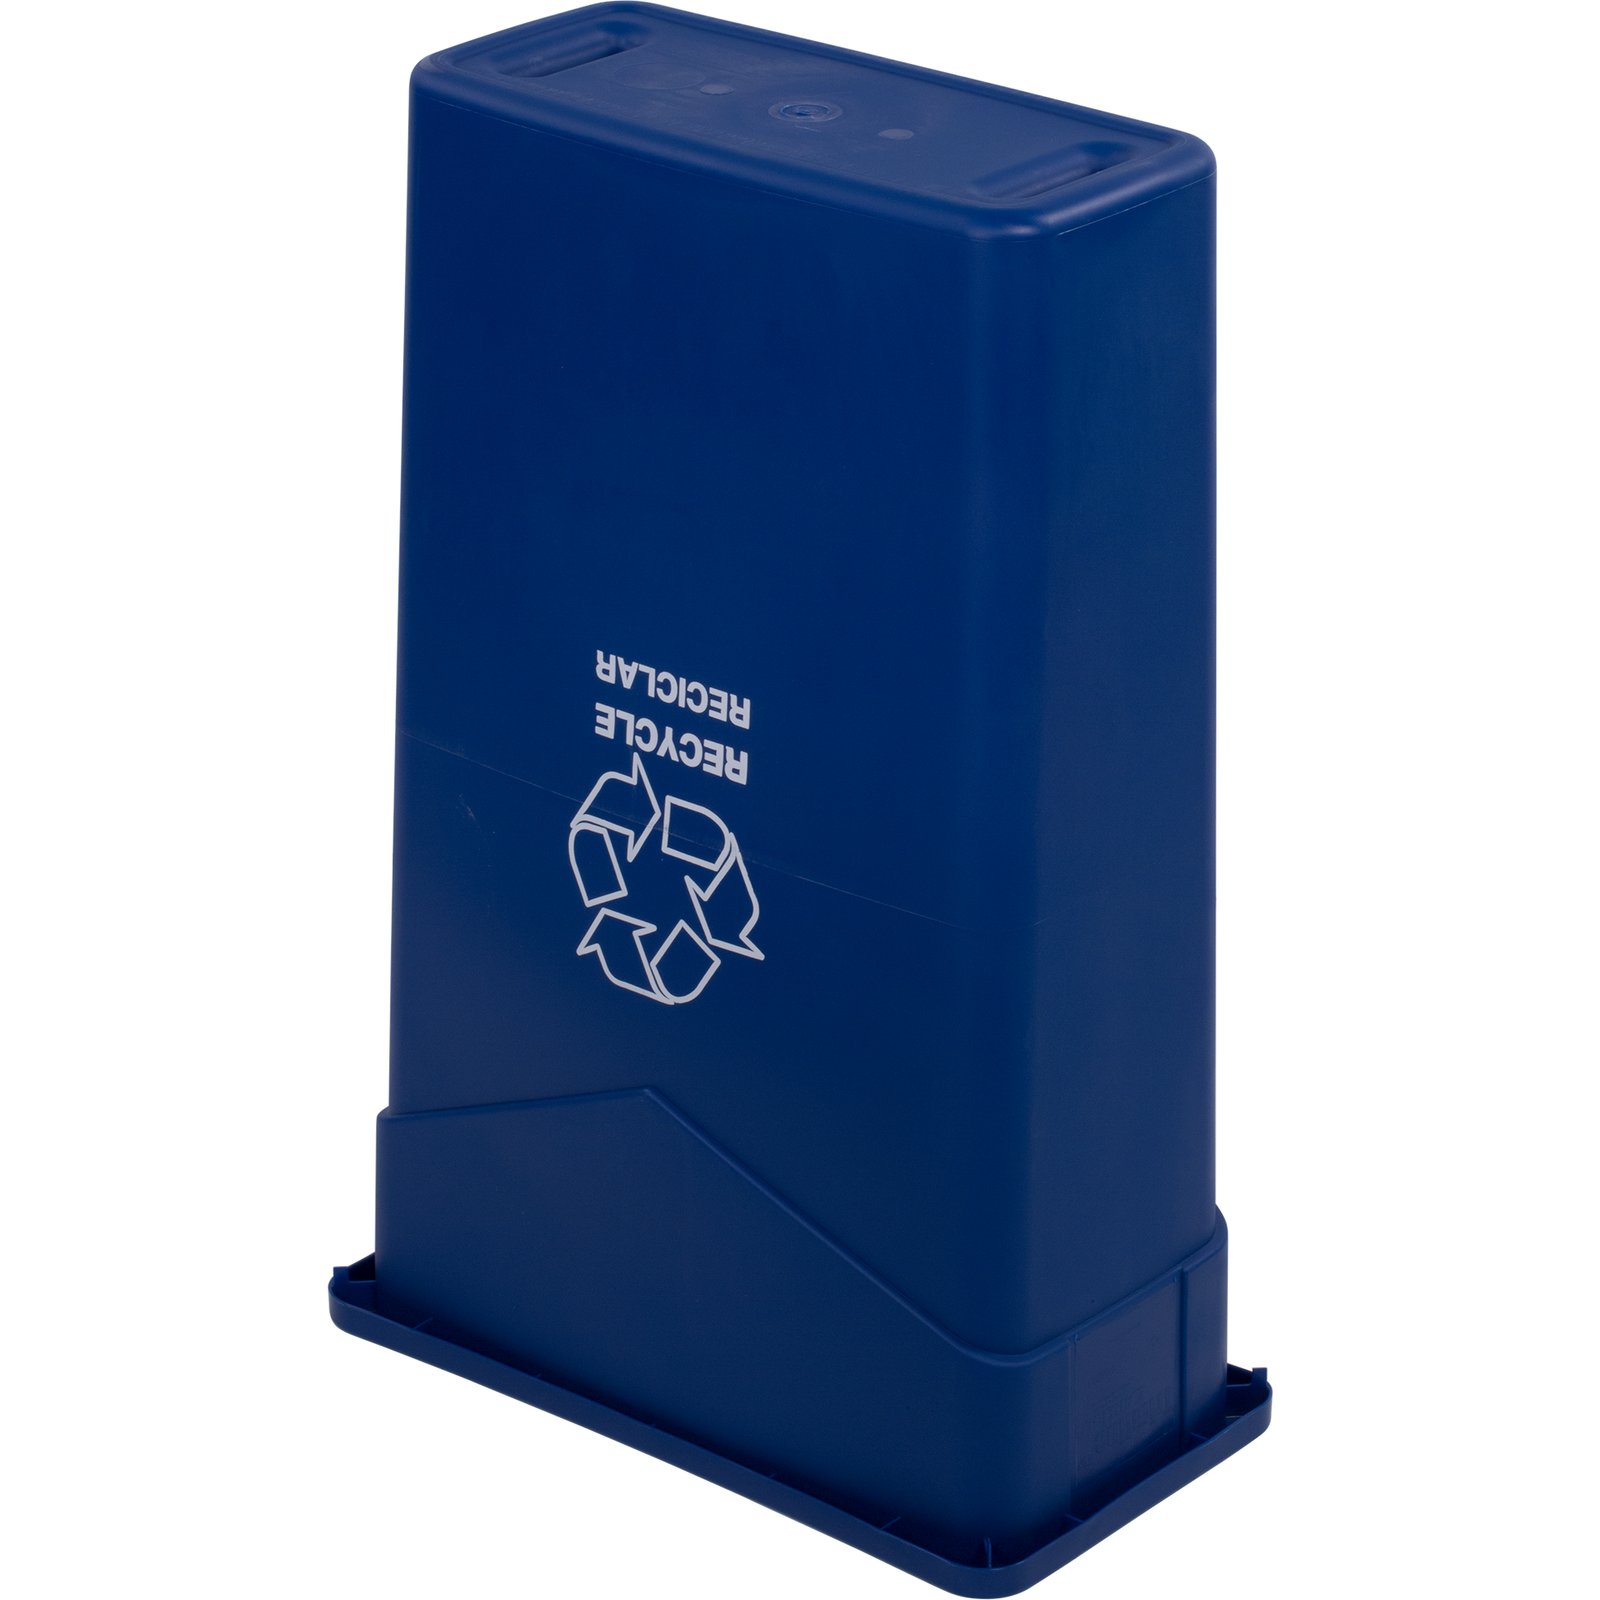 FOH PP Recycle Bin Waste Basket Liner, Brown, 12 ct – Universal